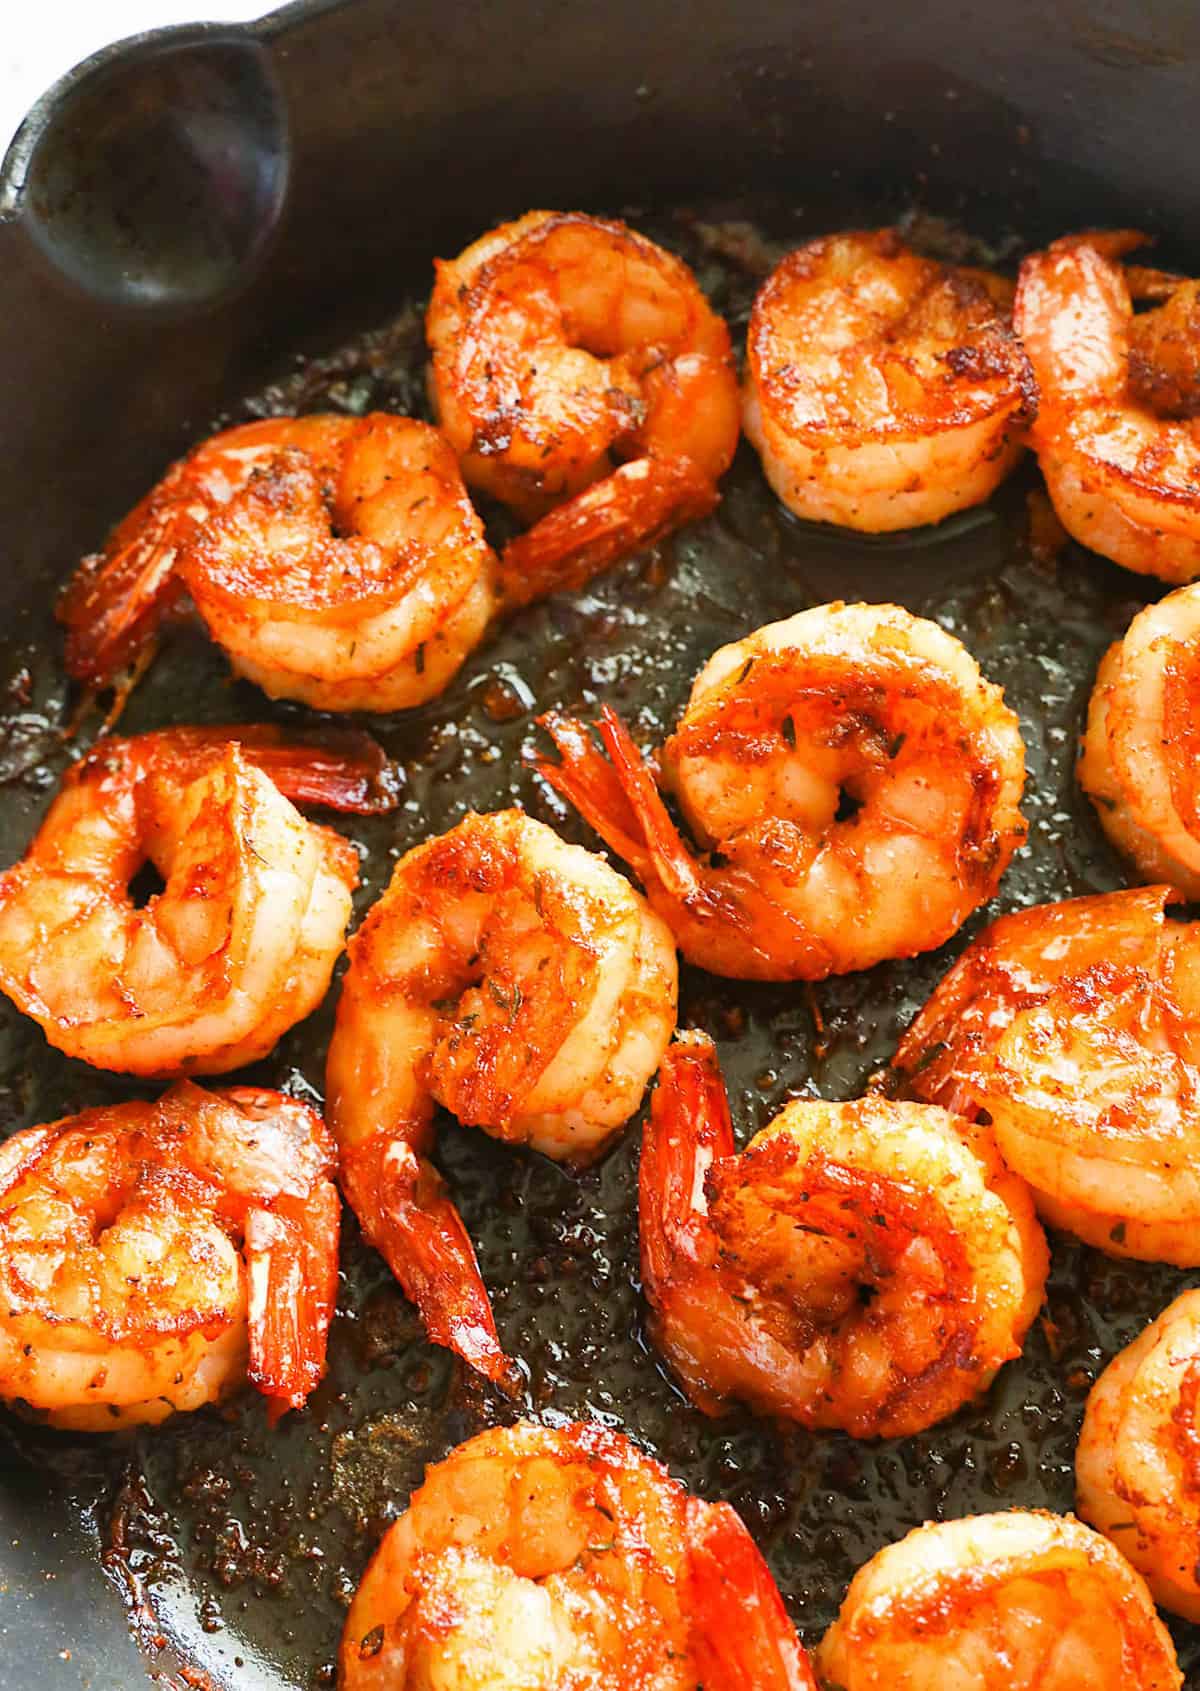 Enjoy Cajun shrimp on its own as an appetizer